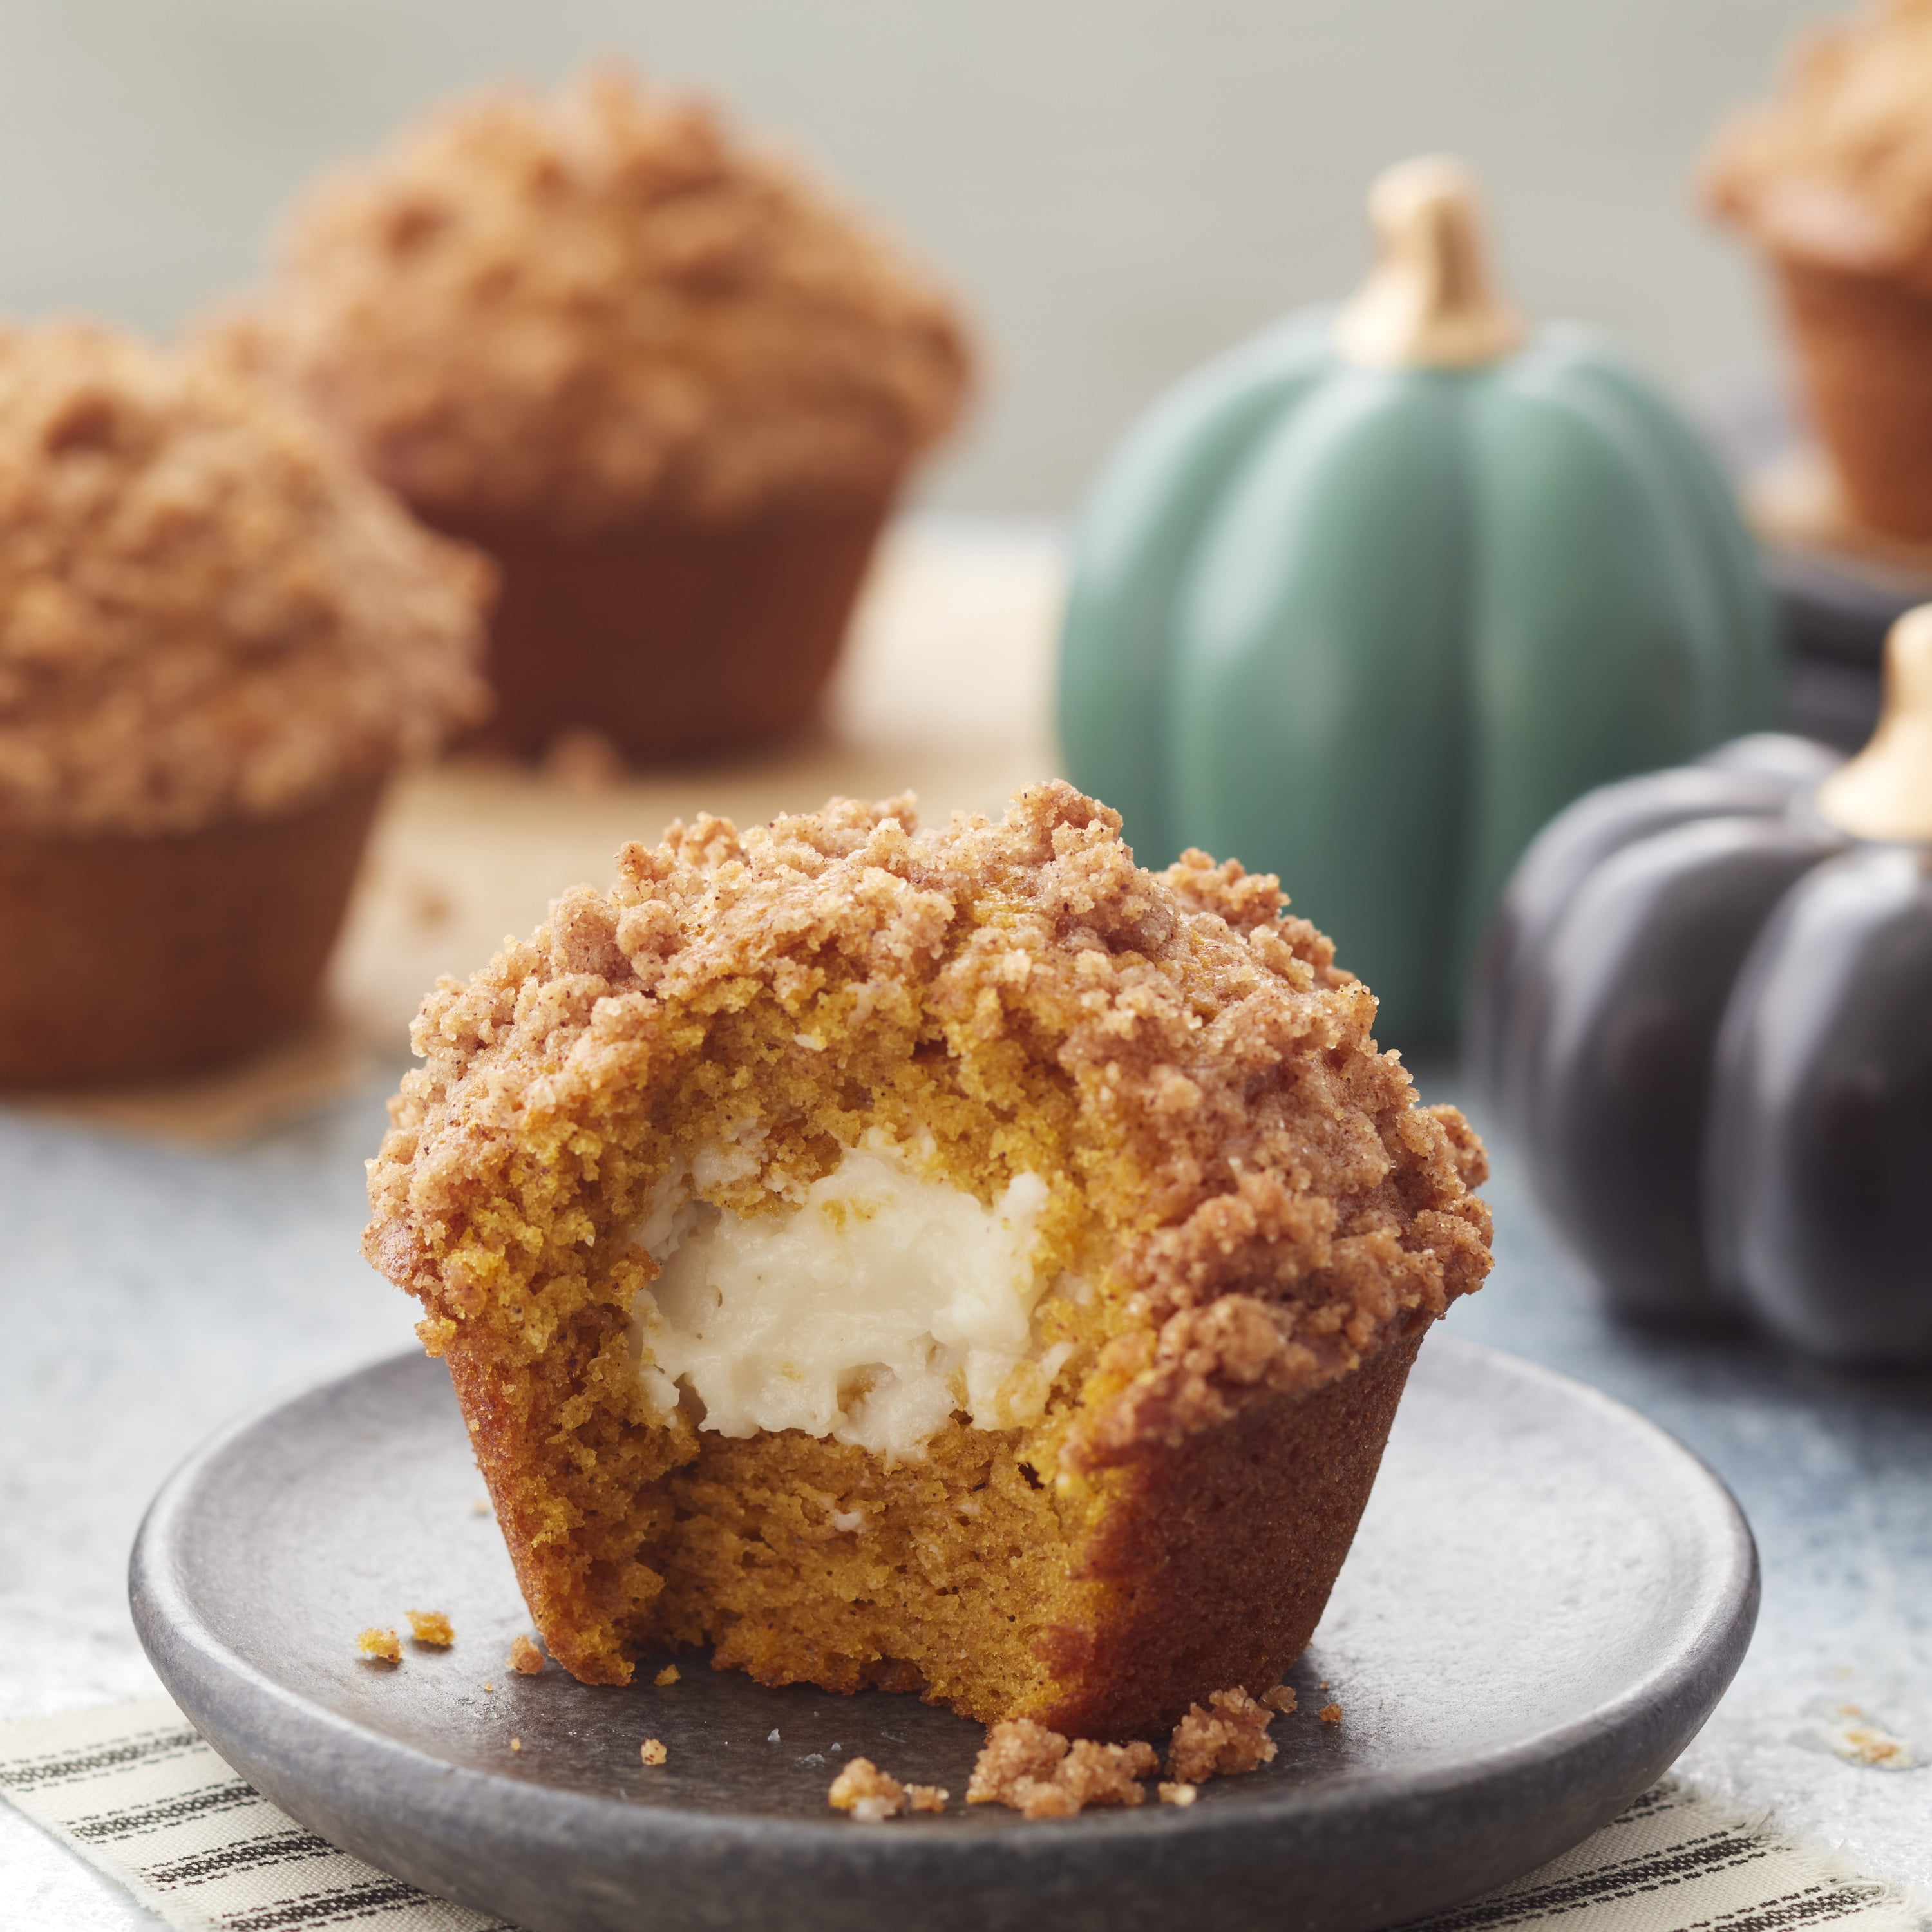 Recipe Right Nonstick Jumbo Muffin and Cupcake Pan, 6-Cavity - Wilton